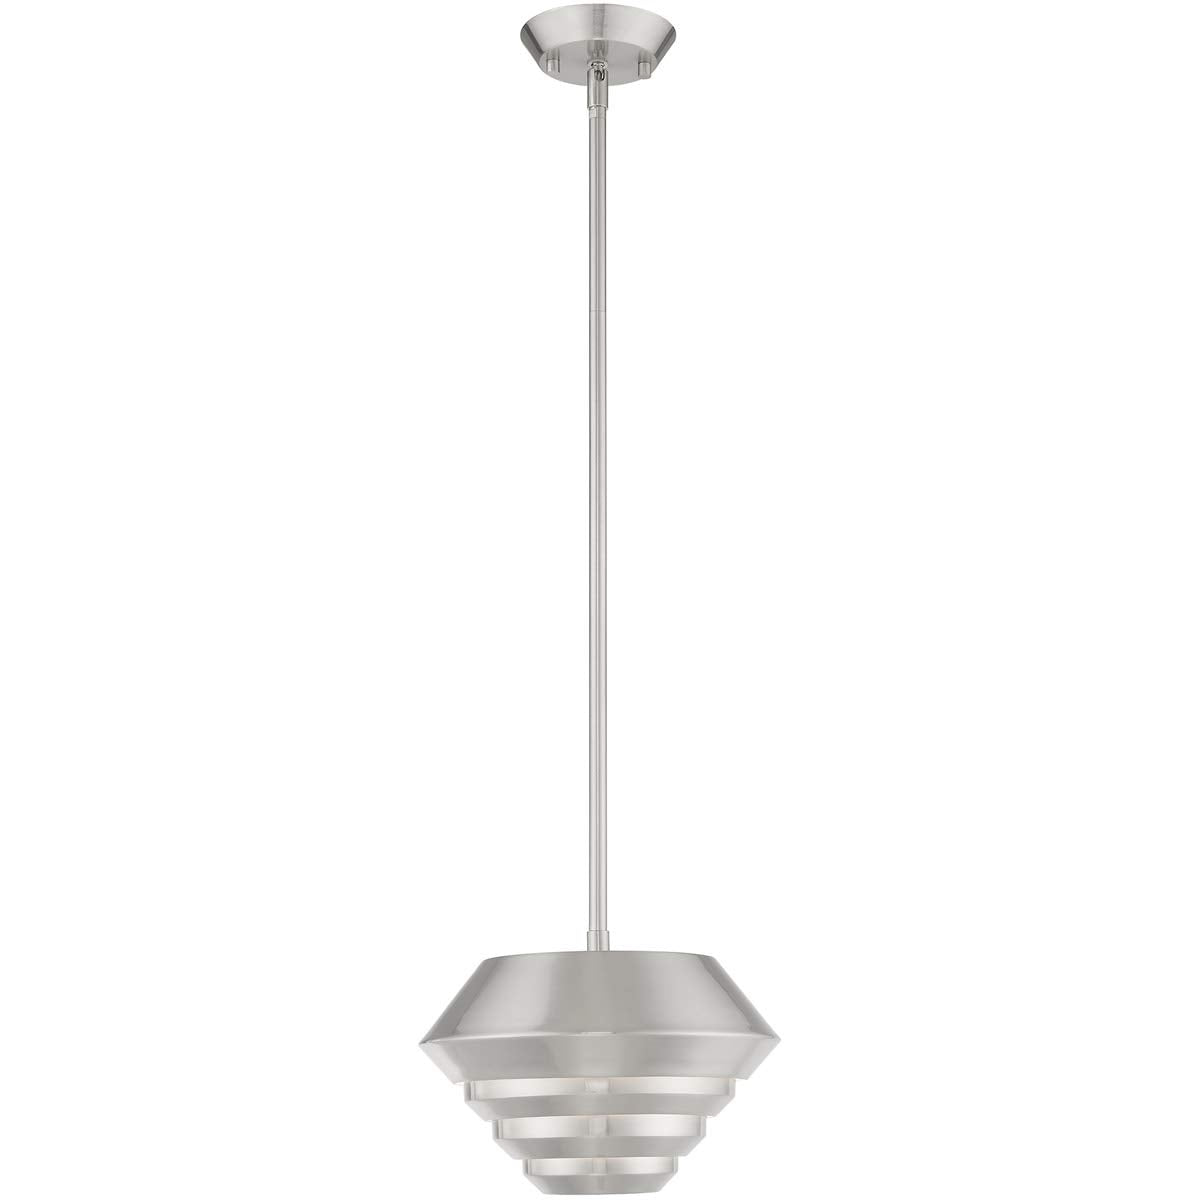 Livex Lighting 40401-91 Amsterdam - 16" One Light Mini Pendant, Brushed Nickel Finish with Brushed Nickel Metal Shade